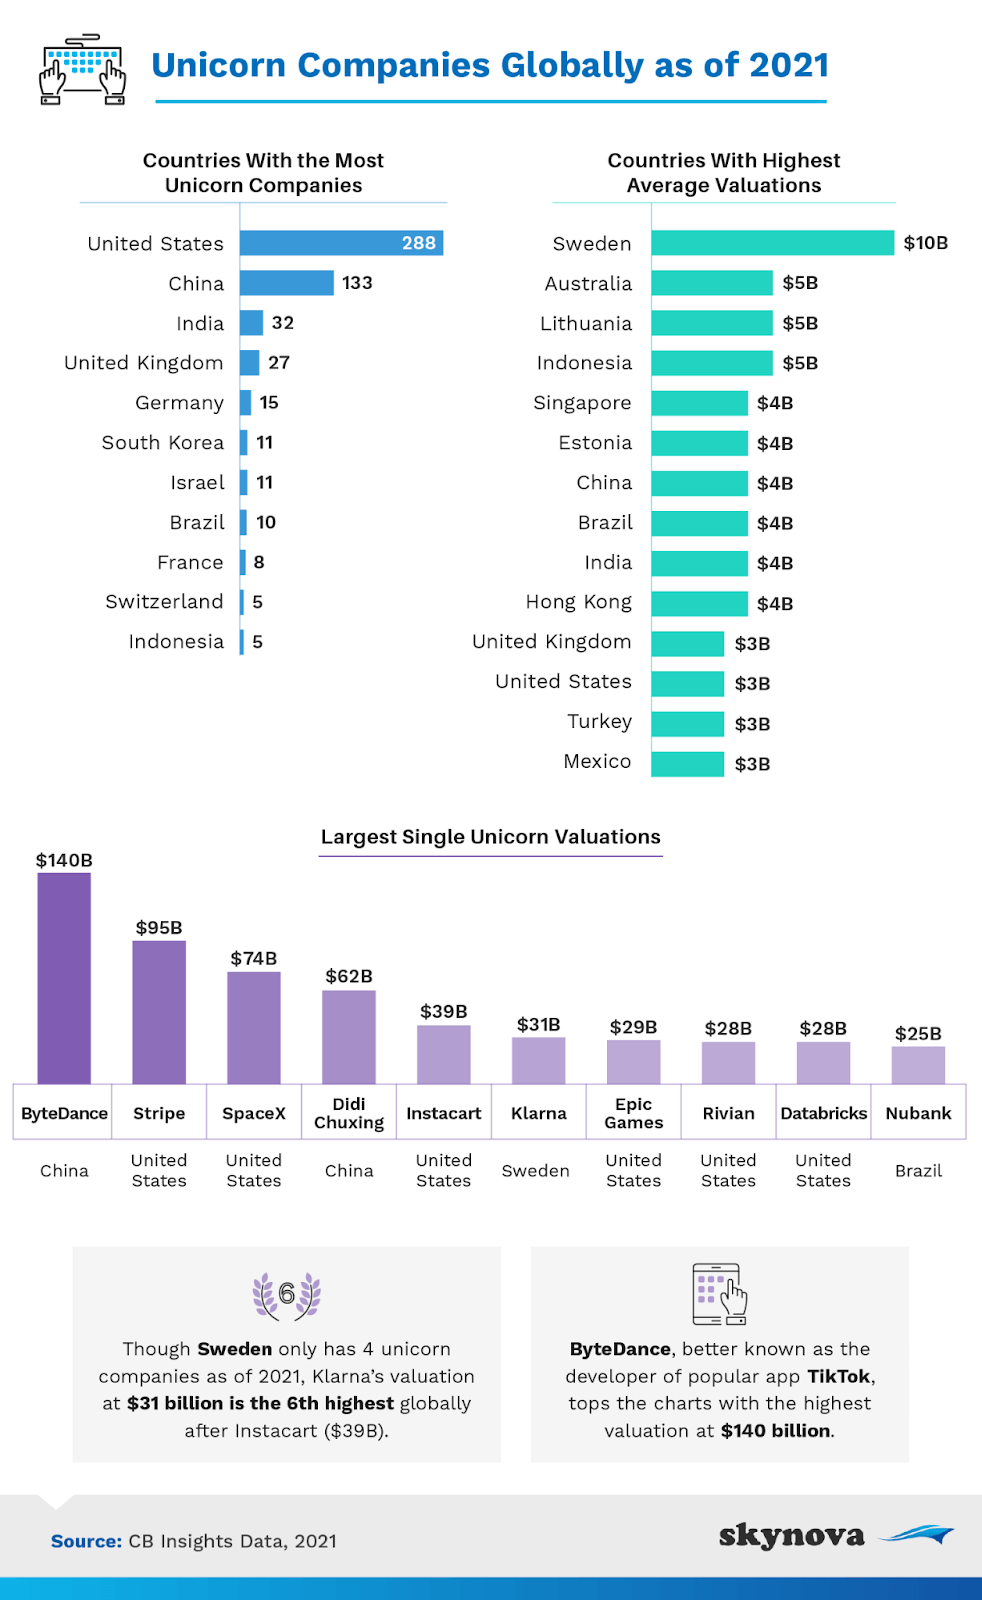 Unicorn companies globally as of 2021